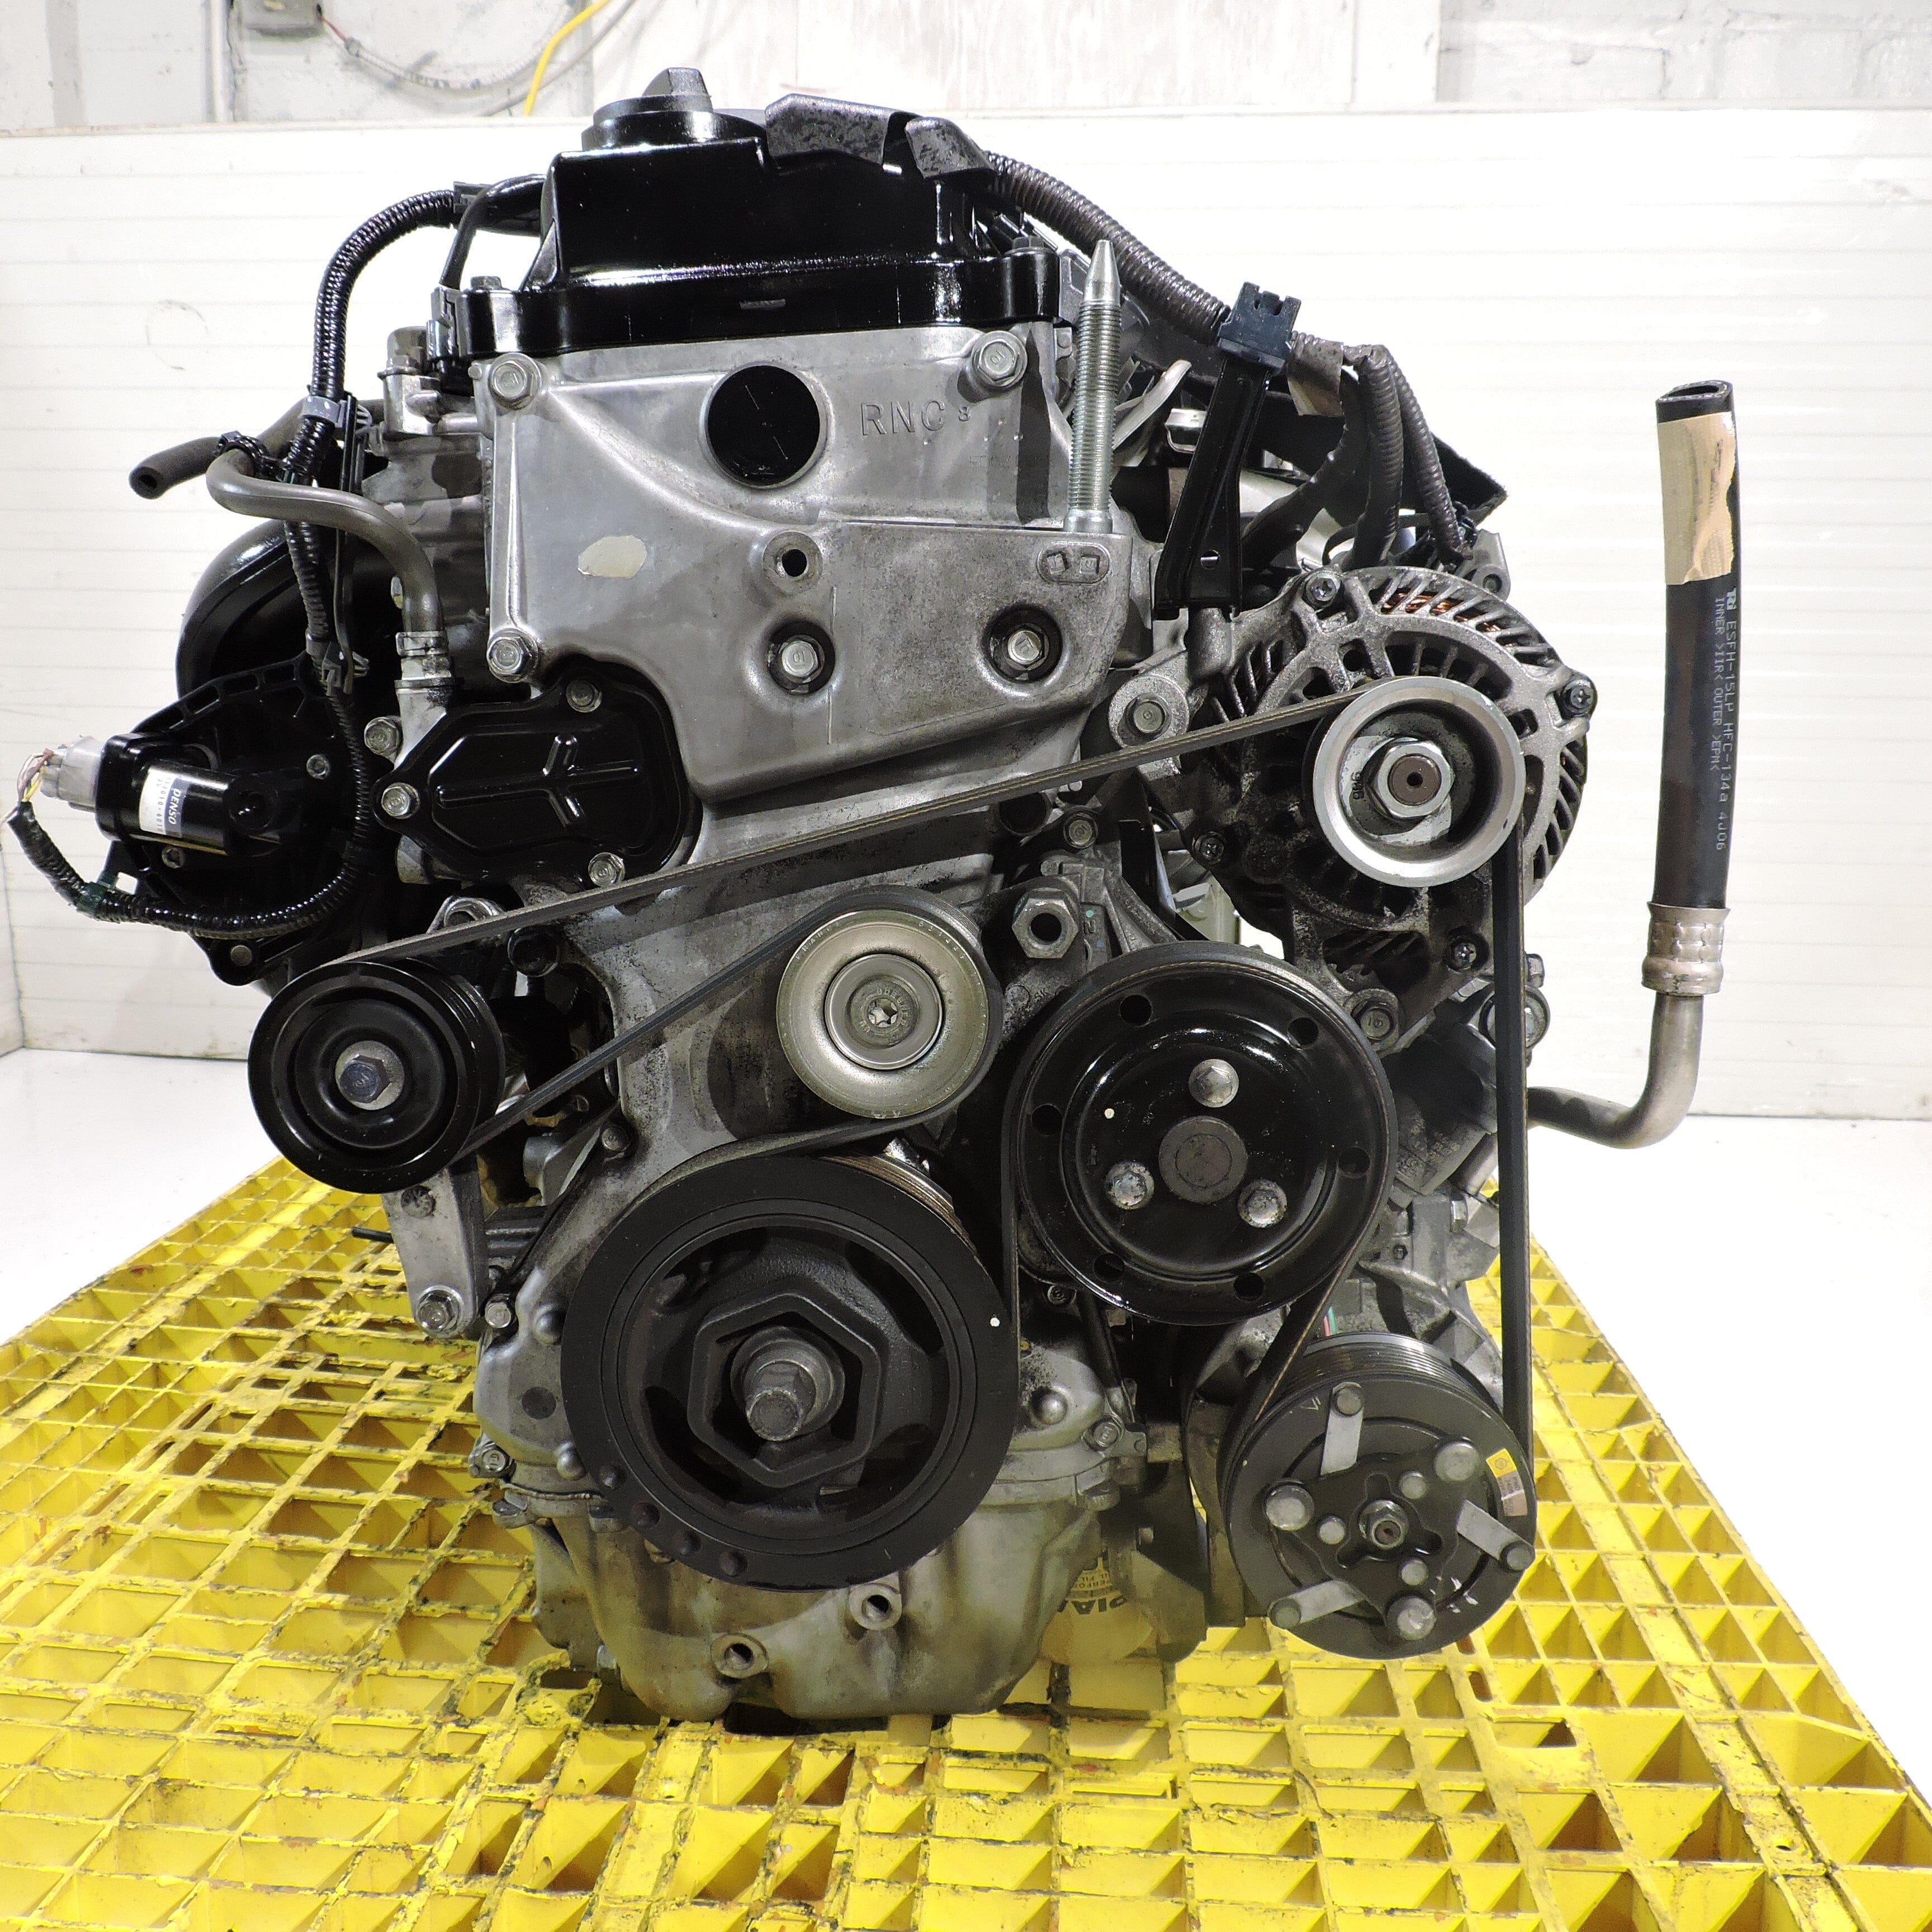 Honda Civic 2006-2011 1.8L JDM Full Engine Automatic Transmission Swap - R18A VTEC SOHC